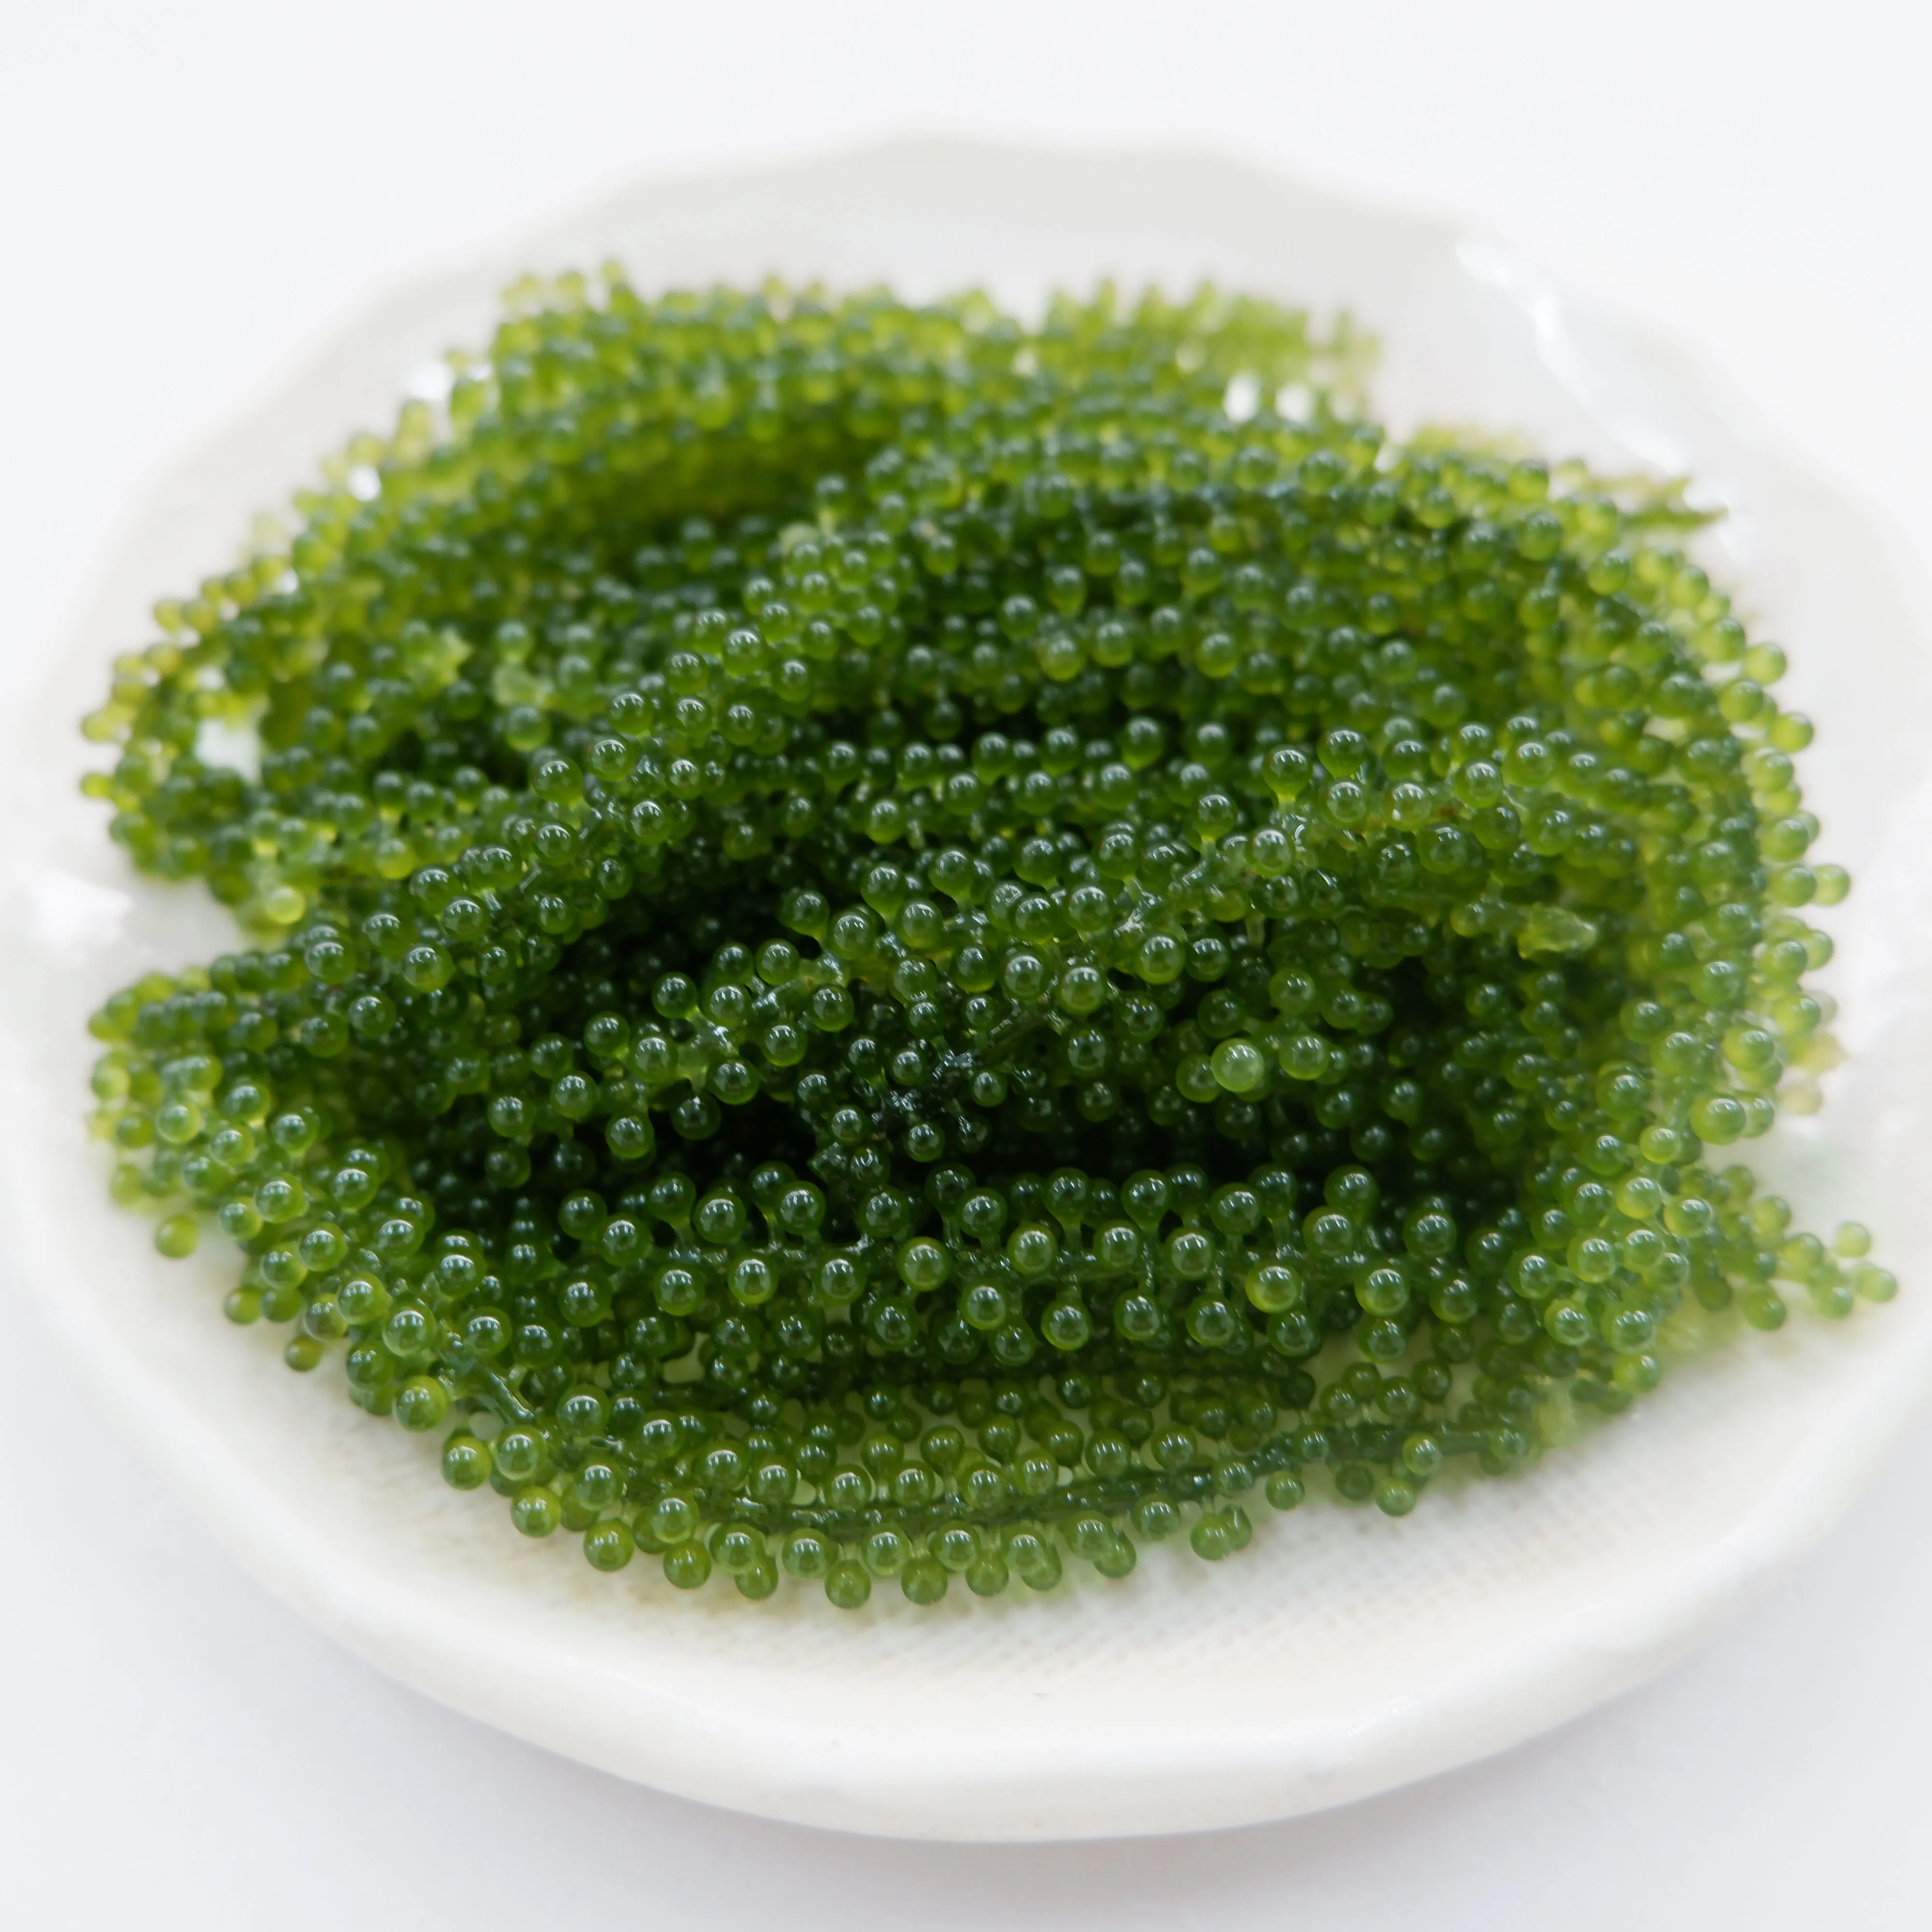 Green Food Salted Sea Grapes/ Dehydrated Seaweed/ Umibudo/ Green caviar/ Caulerpa lentillifera/ Coccoloba Uvifera/ Organic/ 200g